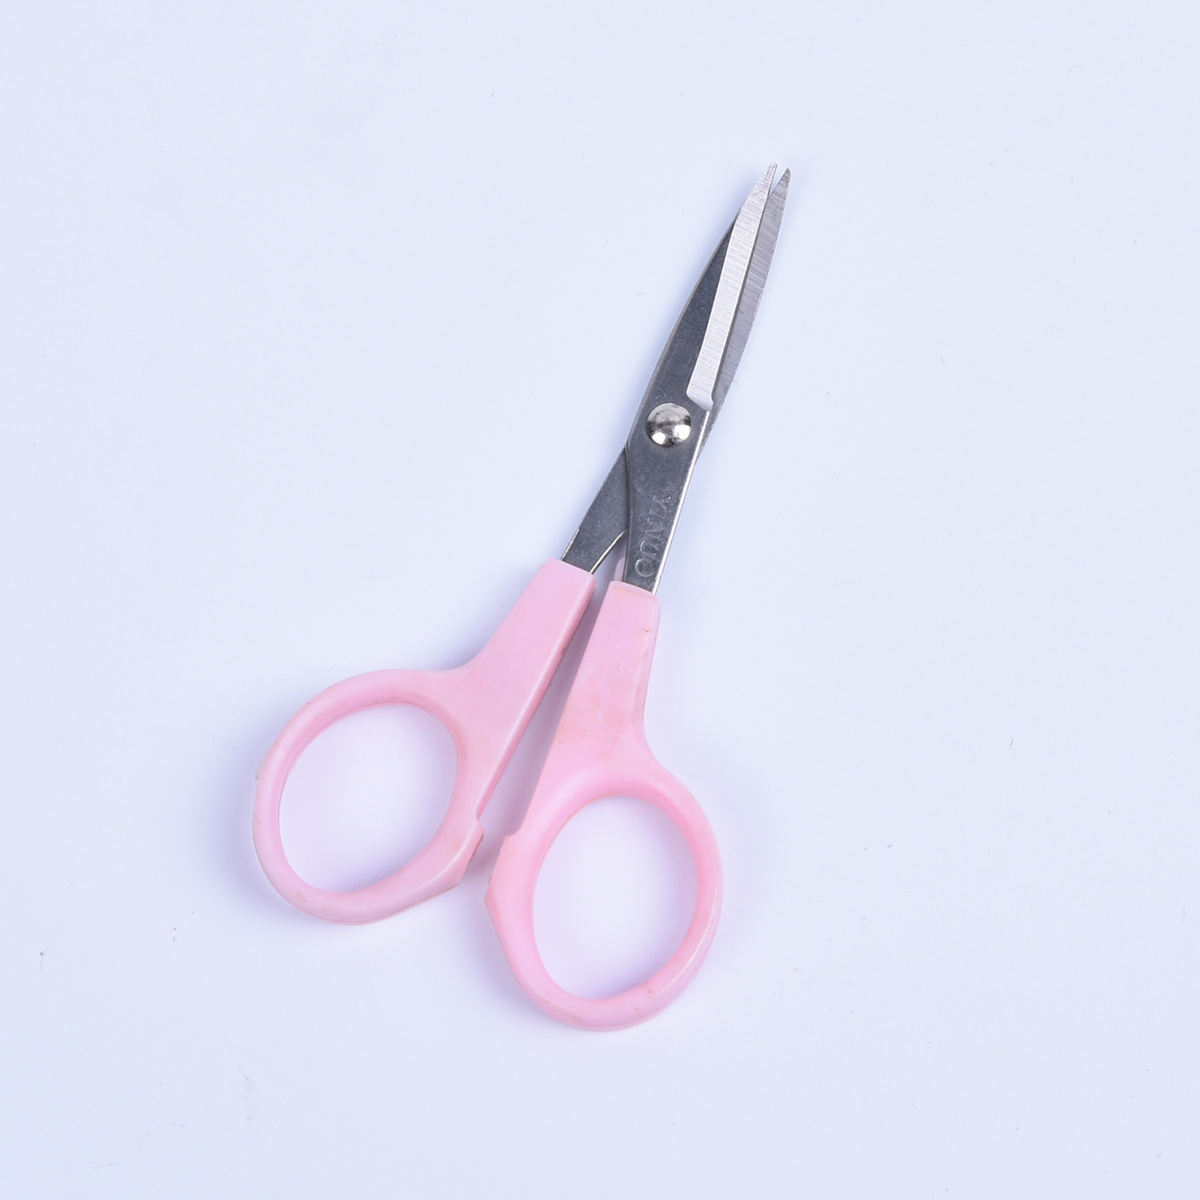 Scissors Small Scissors Warped Head Scissors Embroidery Scissors Thread End Scissors Pink Handle Scissors Yi Nuo Brand Manganese Steel Scissors